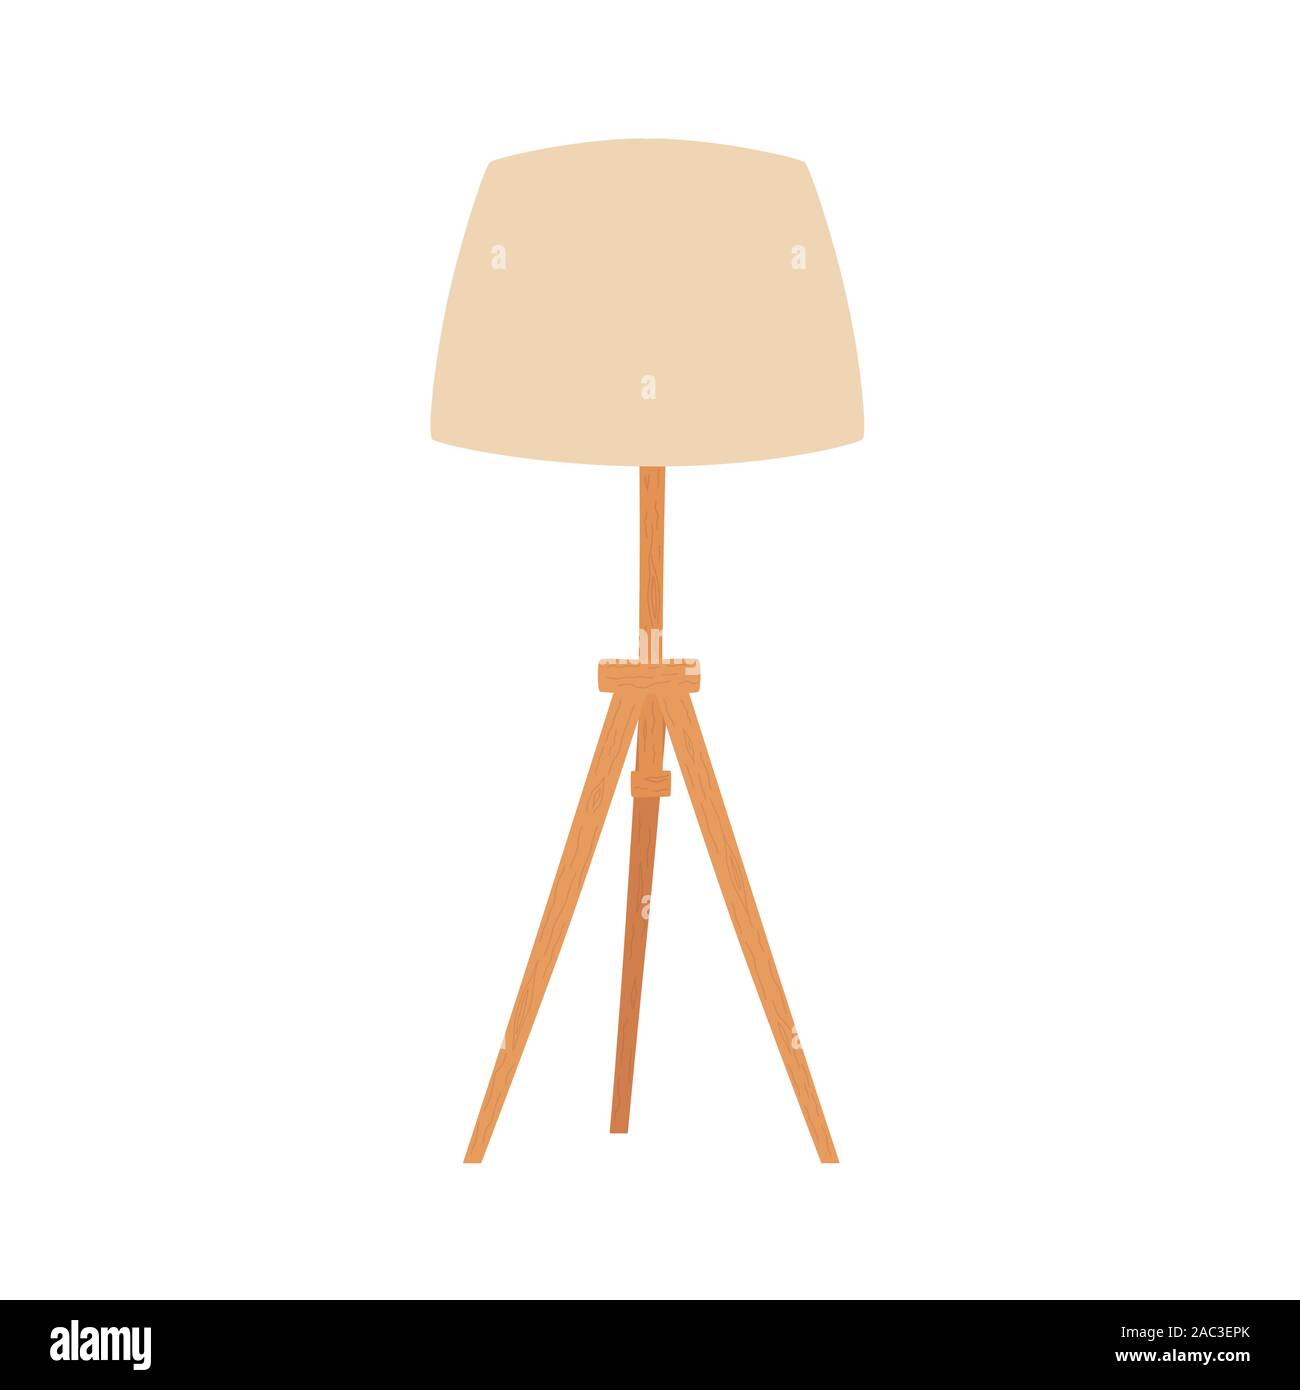 Torchere. Floor lamp. Home interior and creativity. Vector illustration. Stock Vector